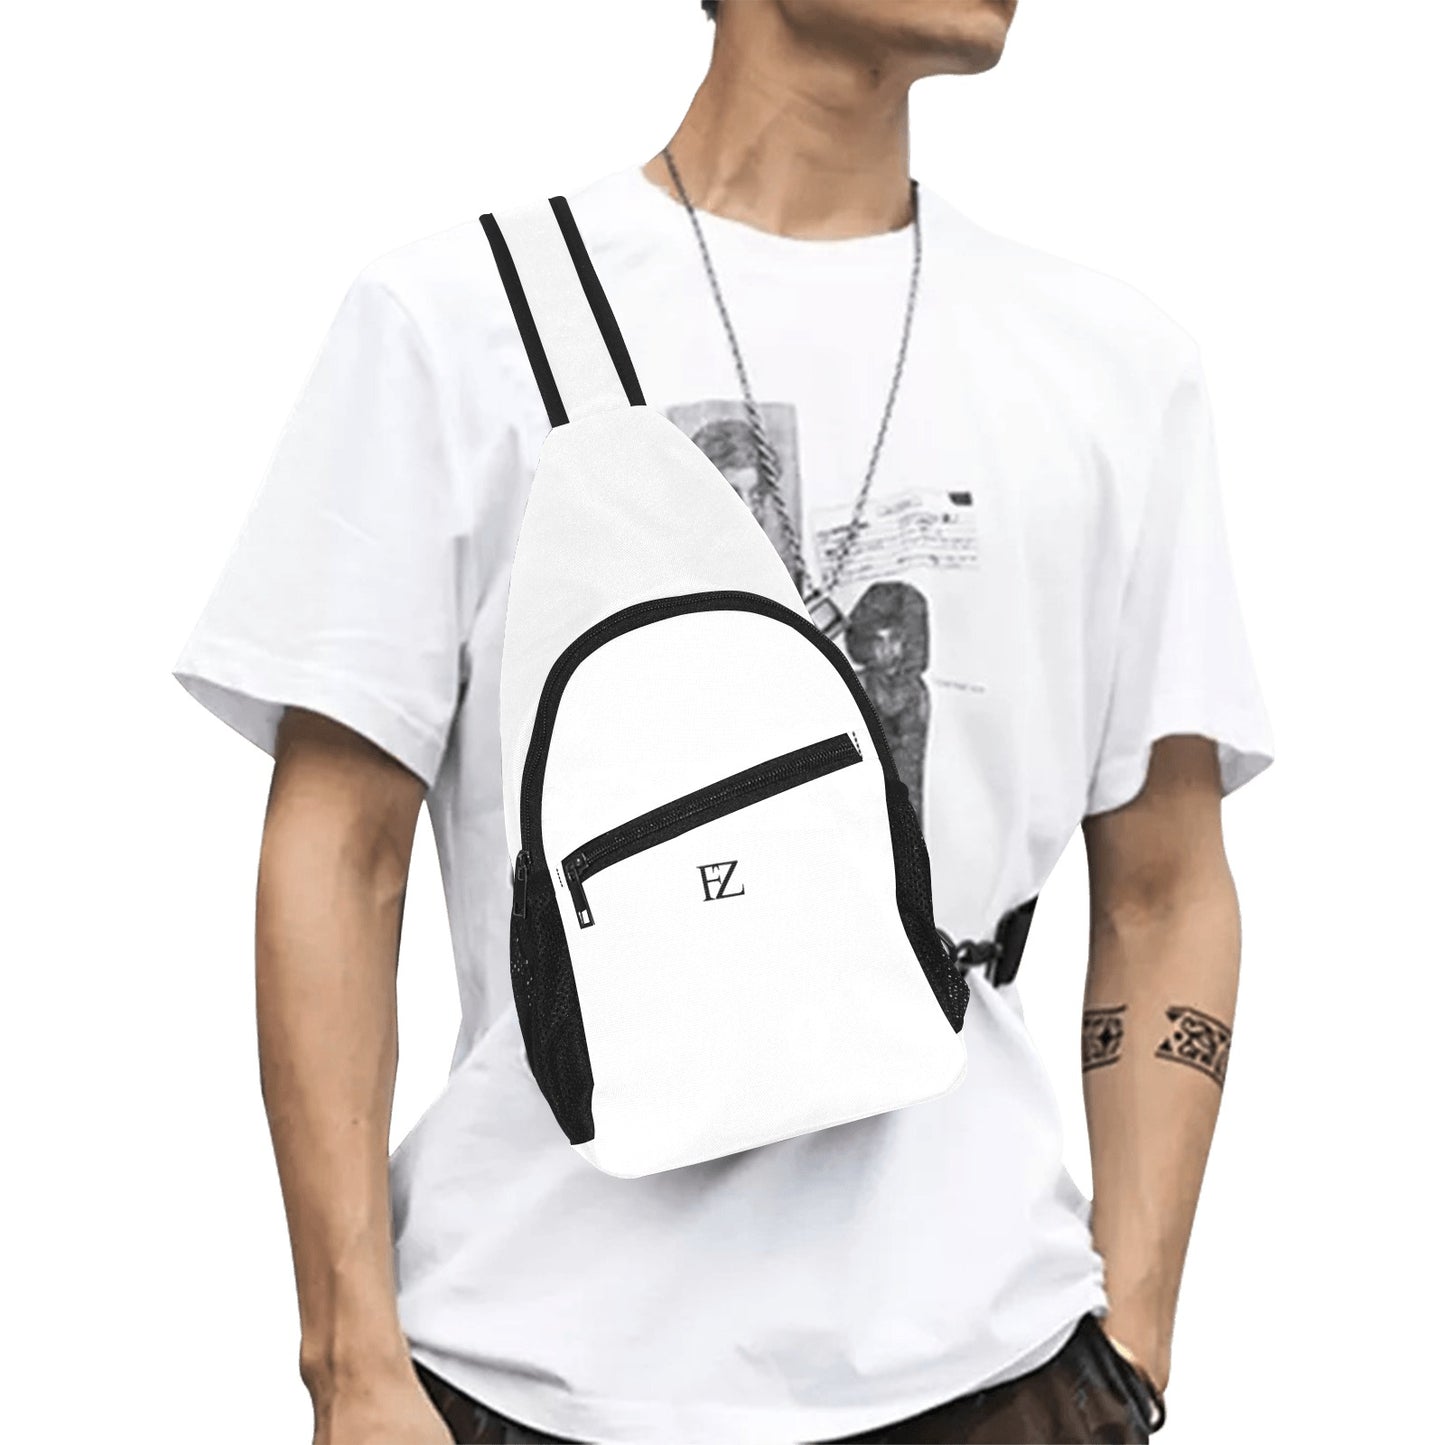 fz men's chest bag too one size / fz chest bag-white all over print chest bag(model1719)